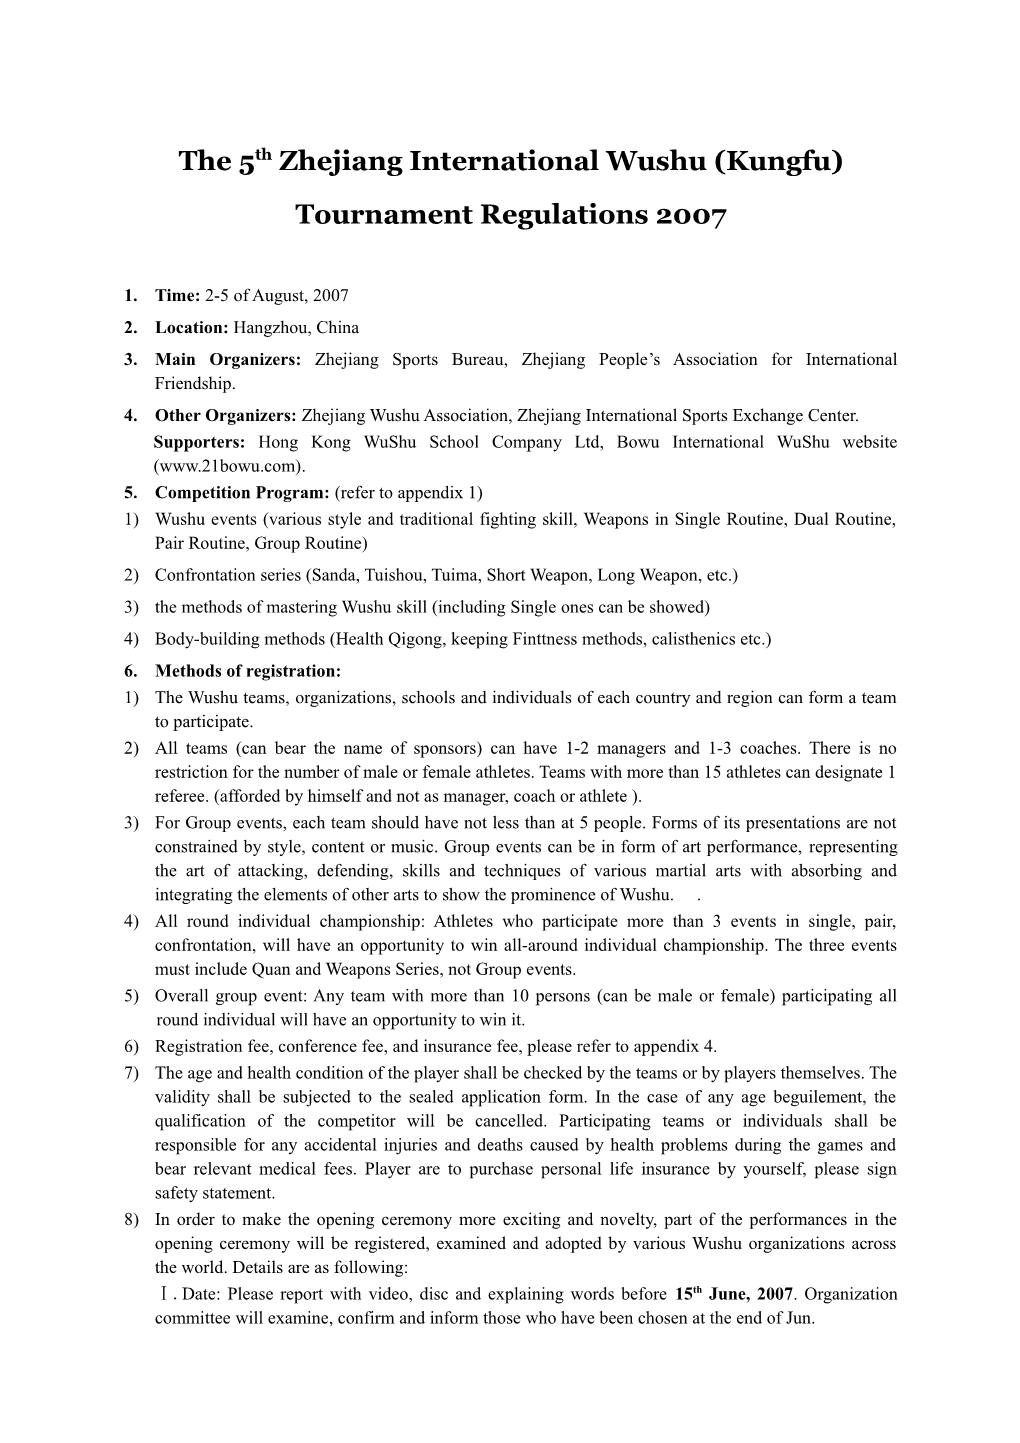 The 5Thzhejiang International Wushu (Kungfu) Tournament Regulations 2007